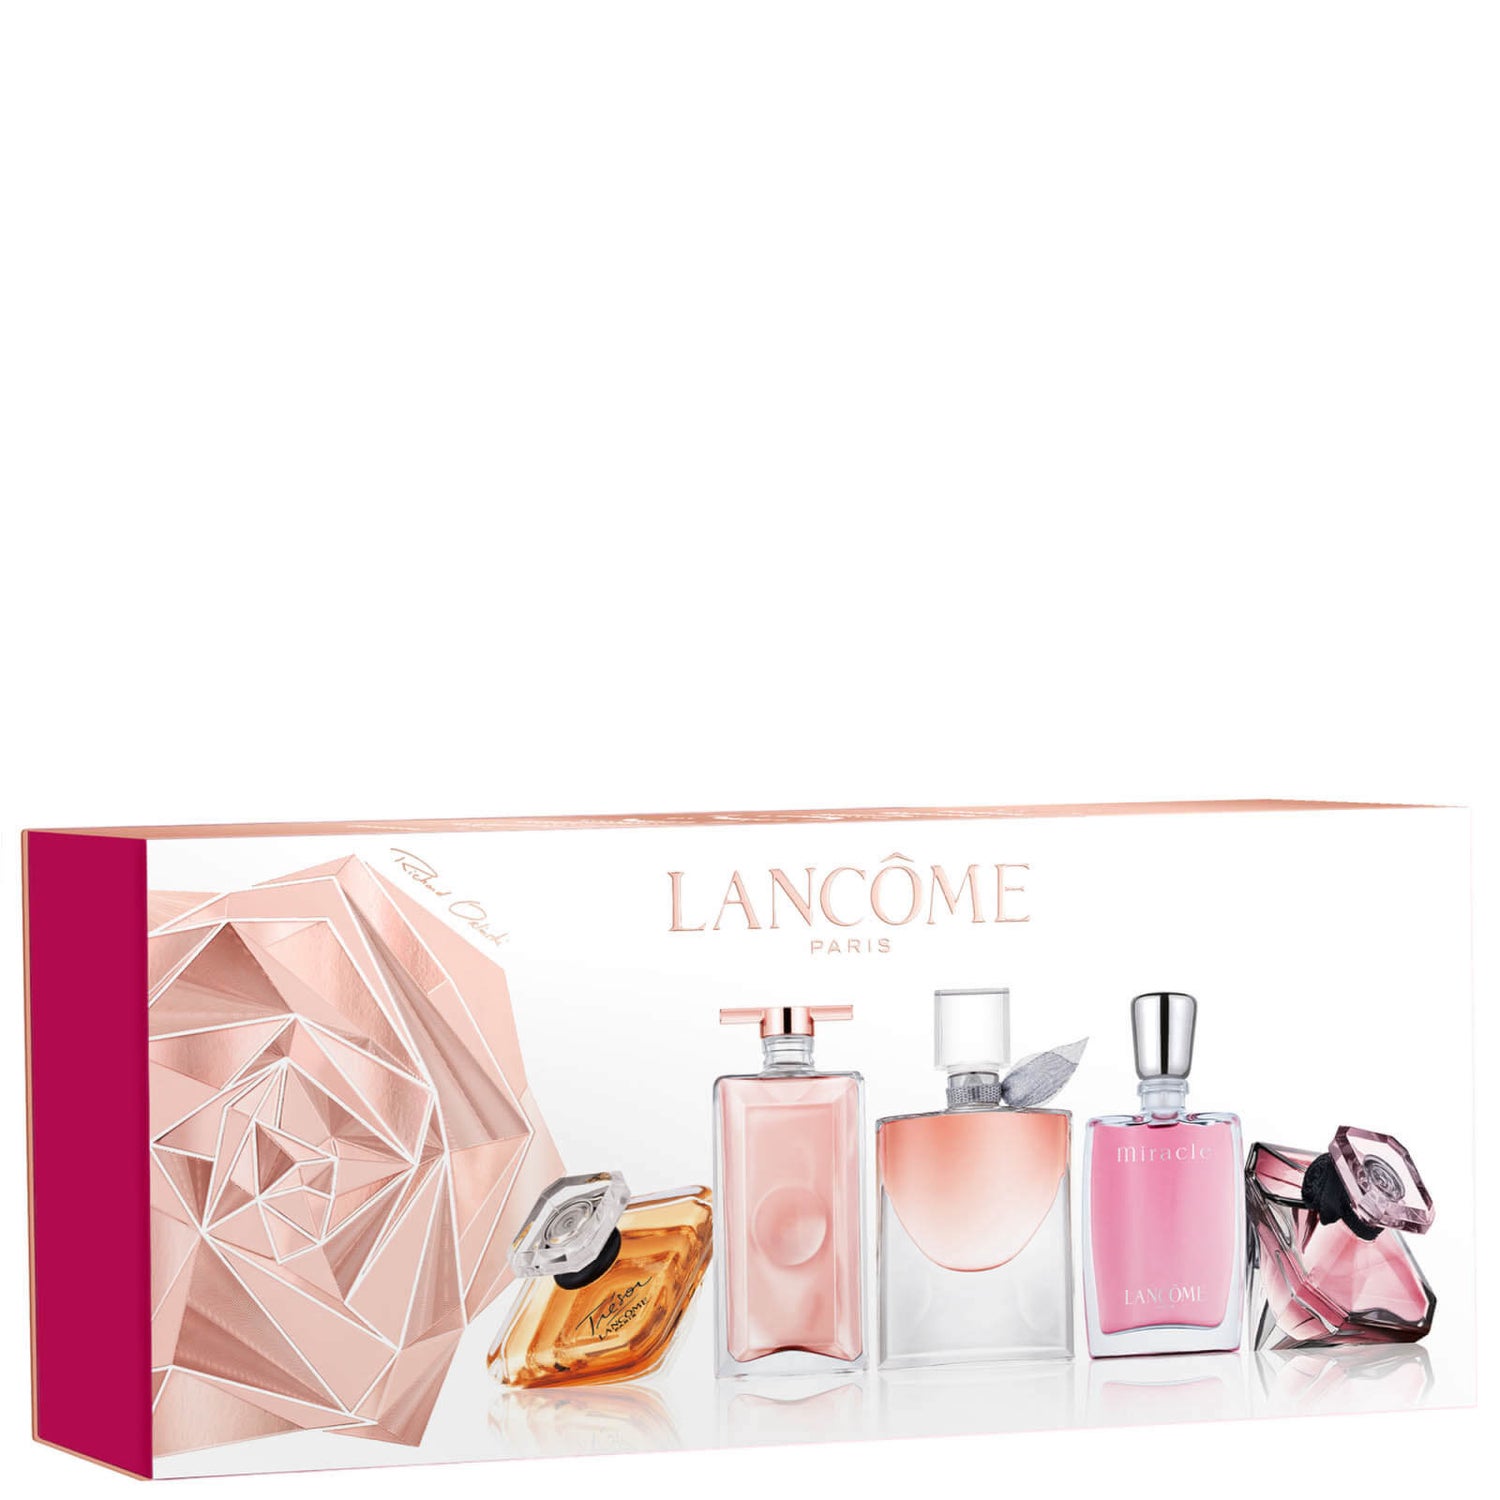 Lancôme Mini Parfum Holiday Gift Set For Her